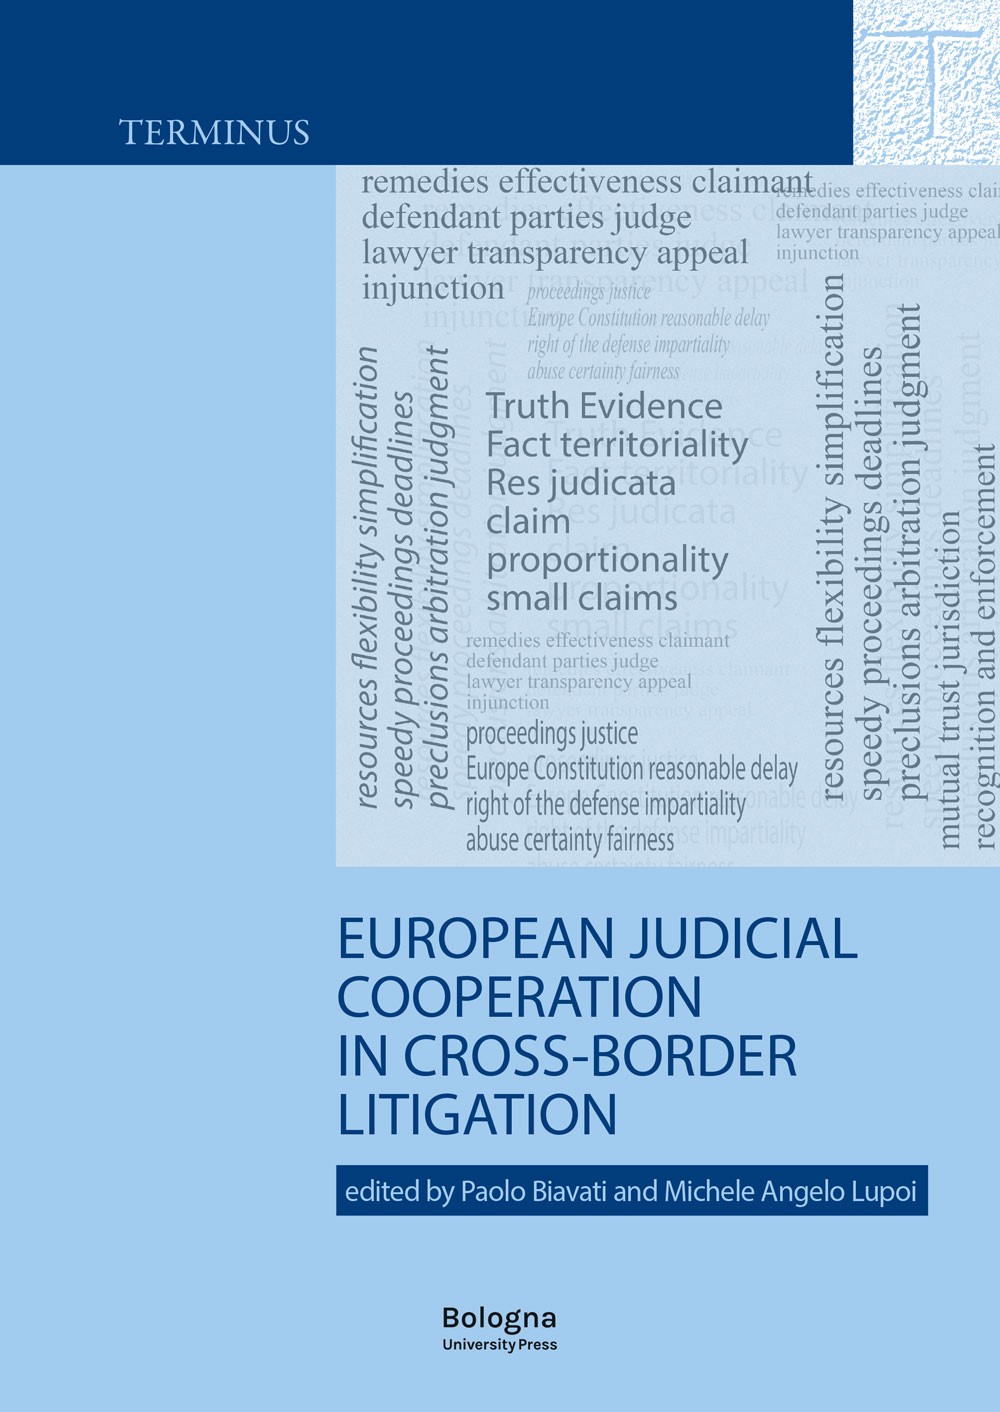 European Judicial Cooperation in Cross-Border Litigation - Bologna University Press